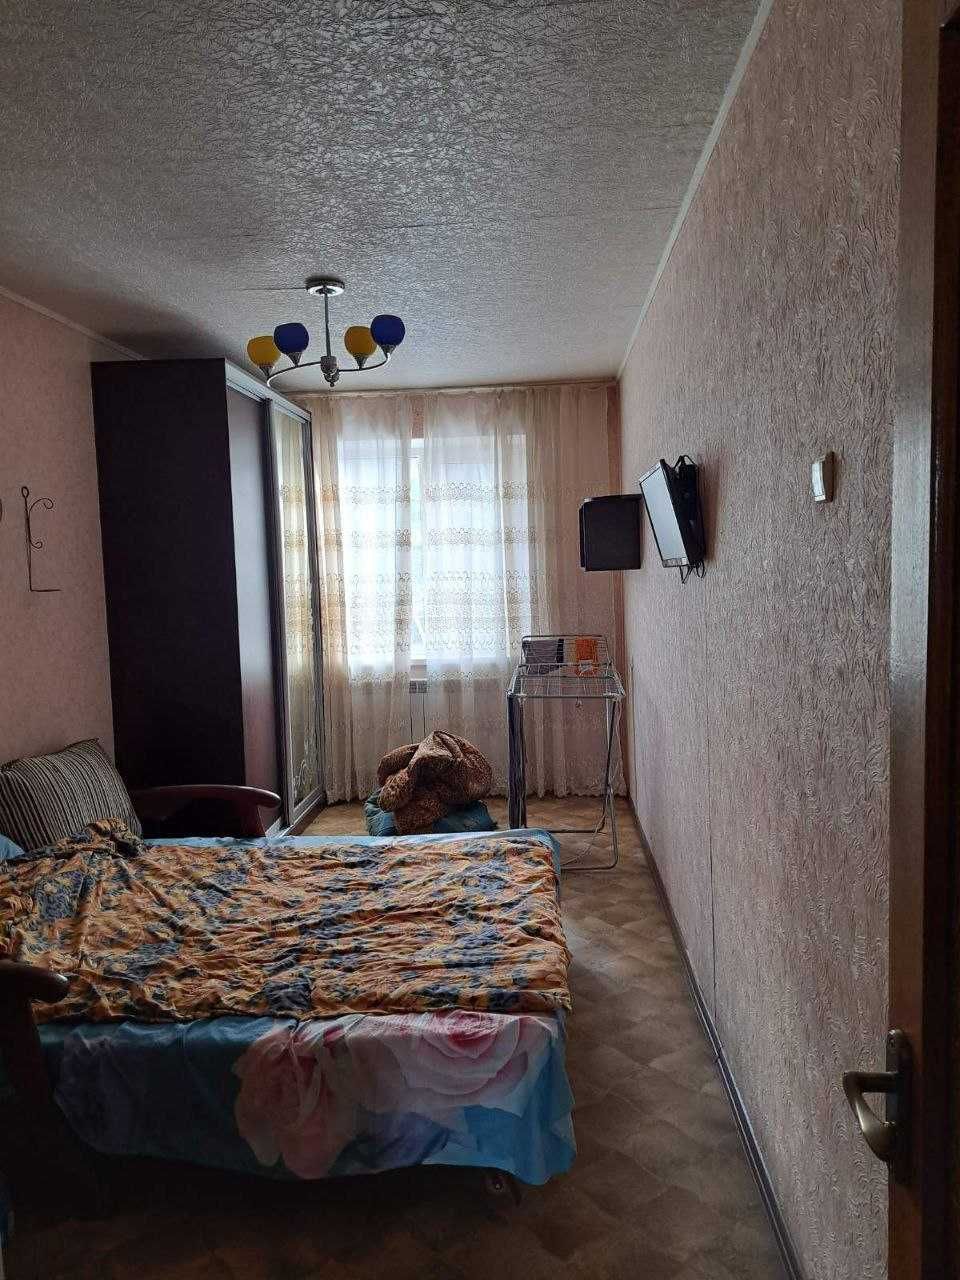 сдам 2 комнатную квартиру на Салтовке ТРК Украина 604 м/р